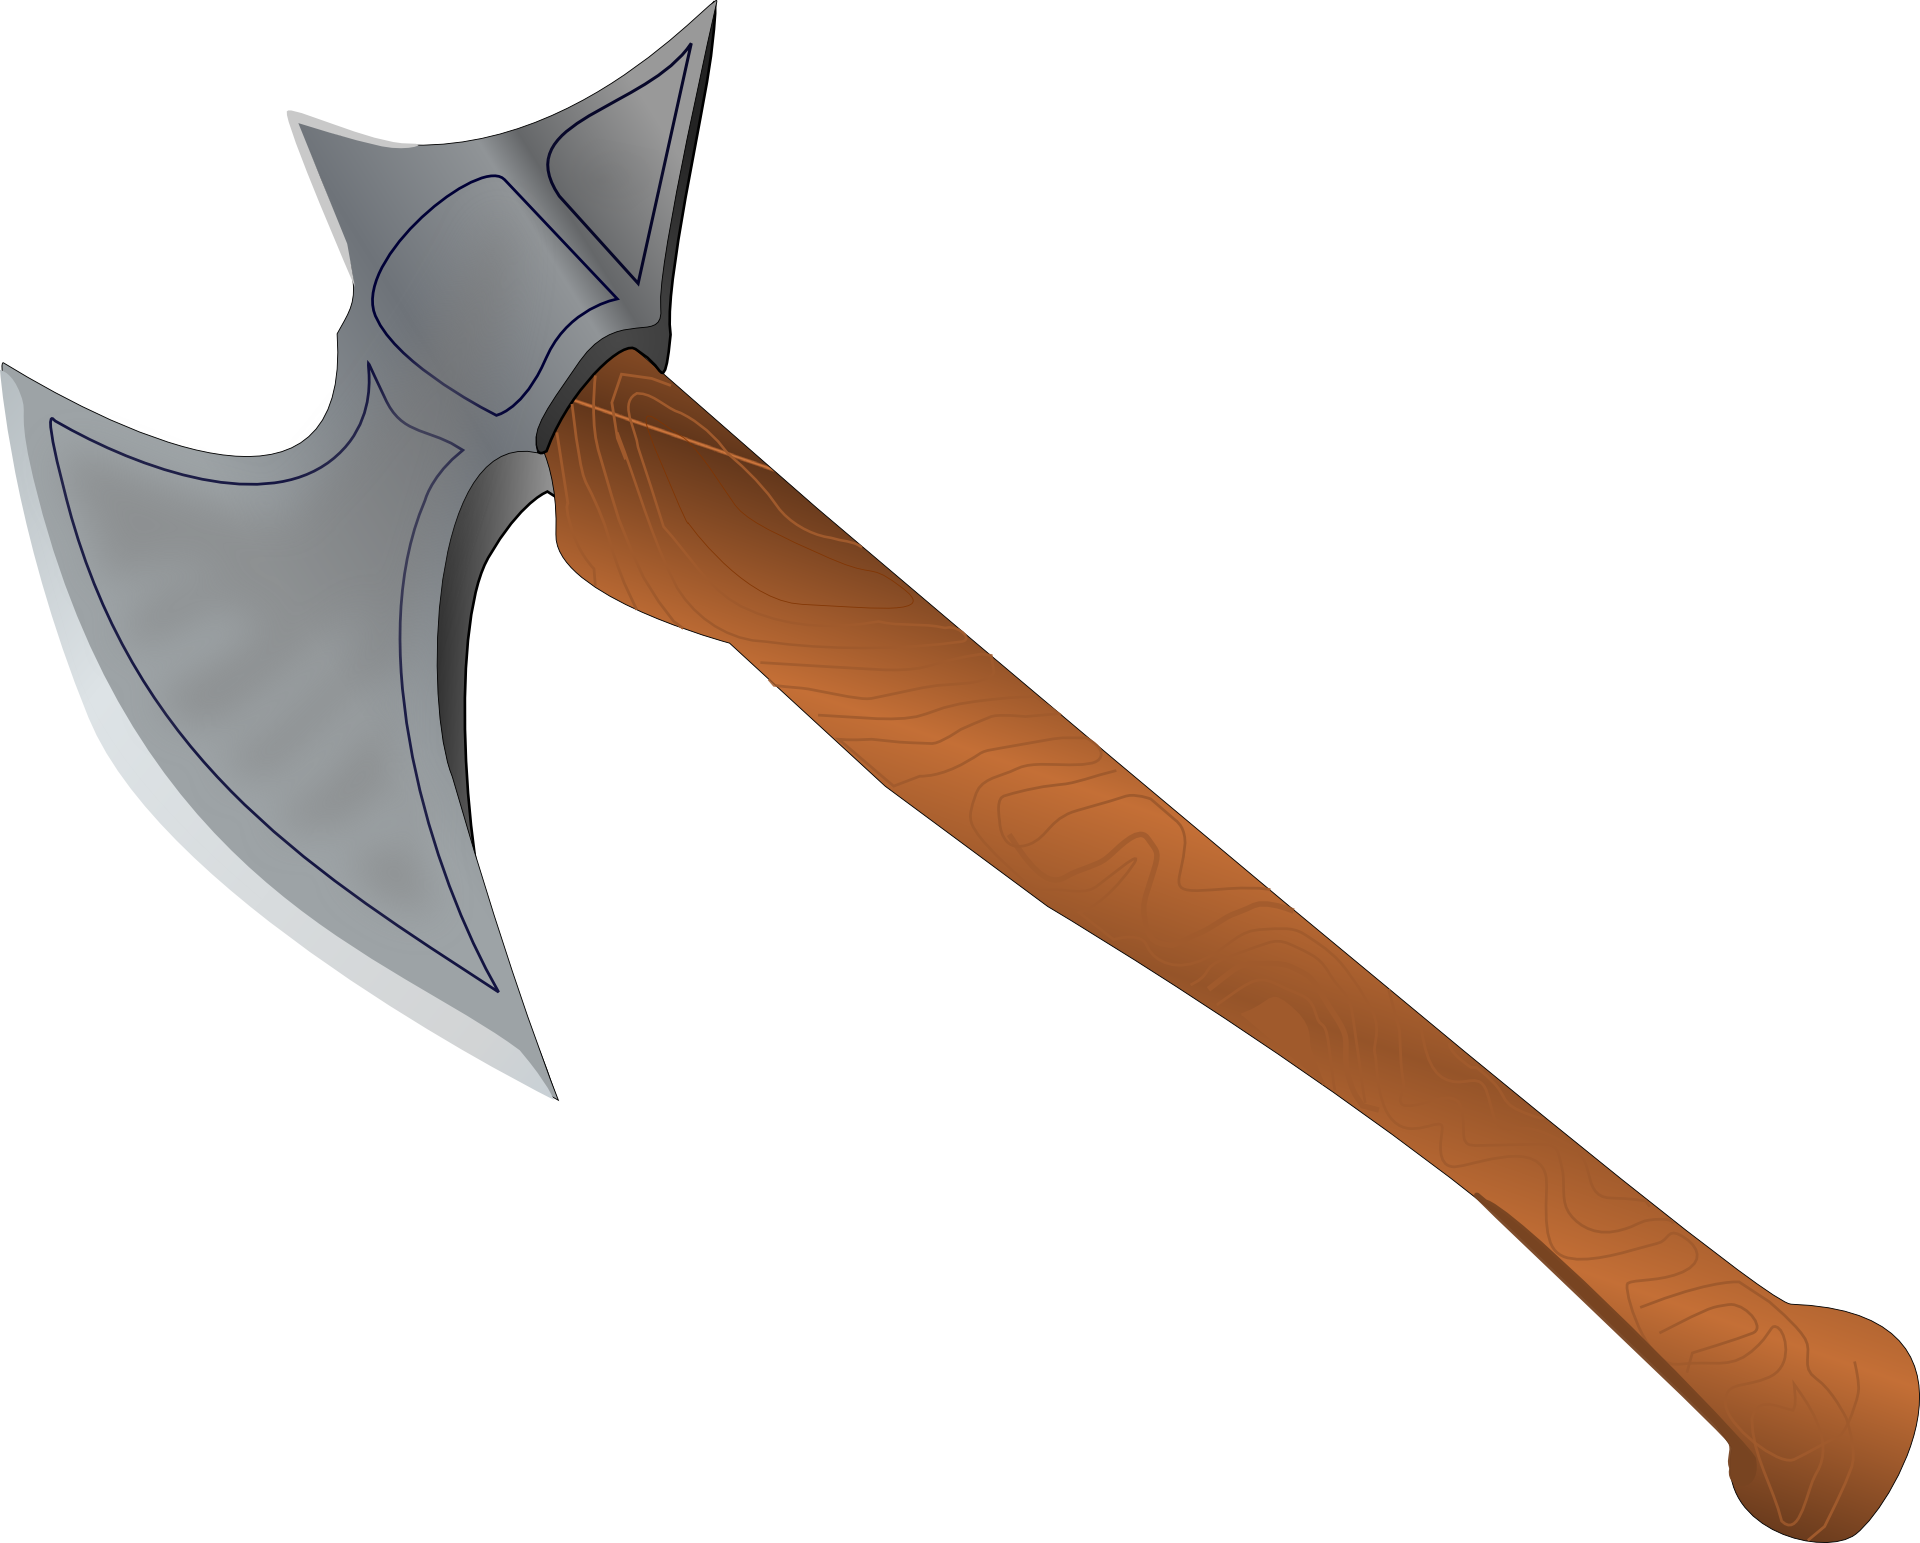 Cartoonish viking axe PNG Image.